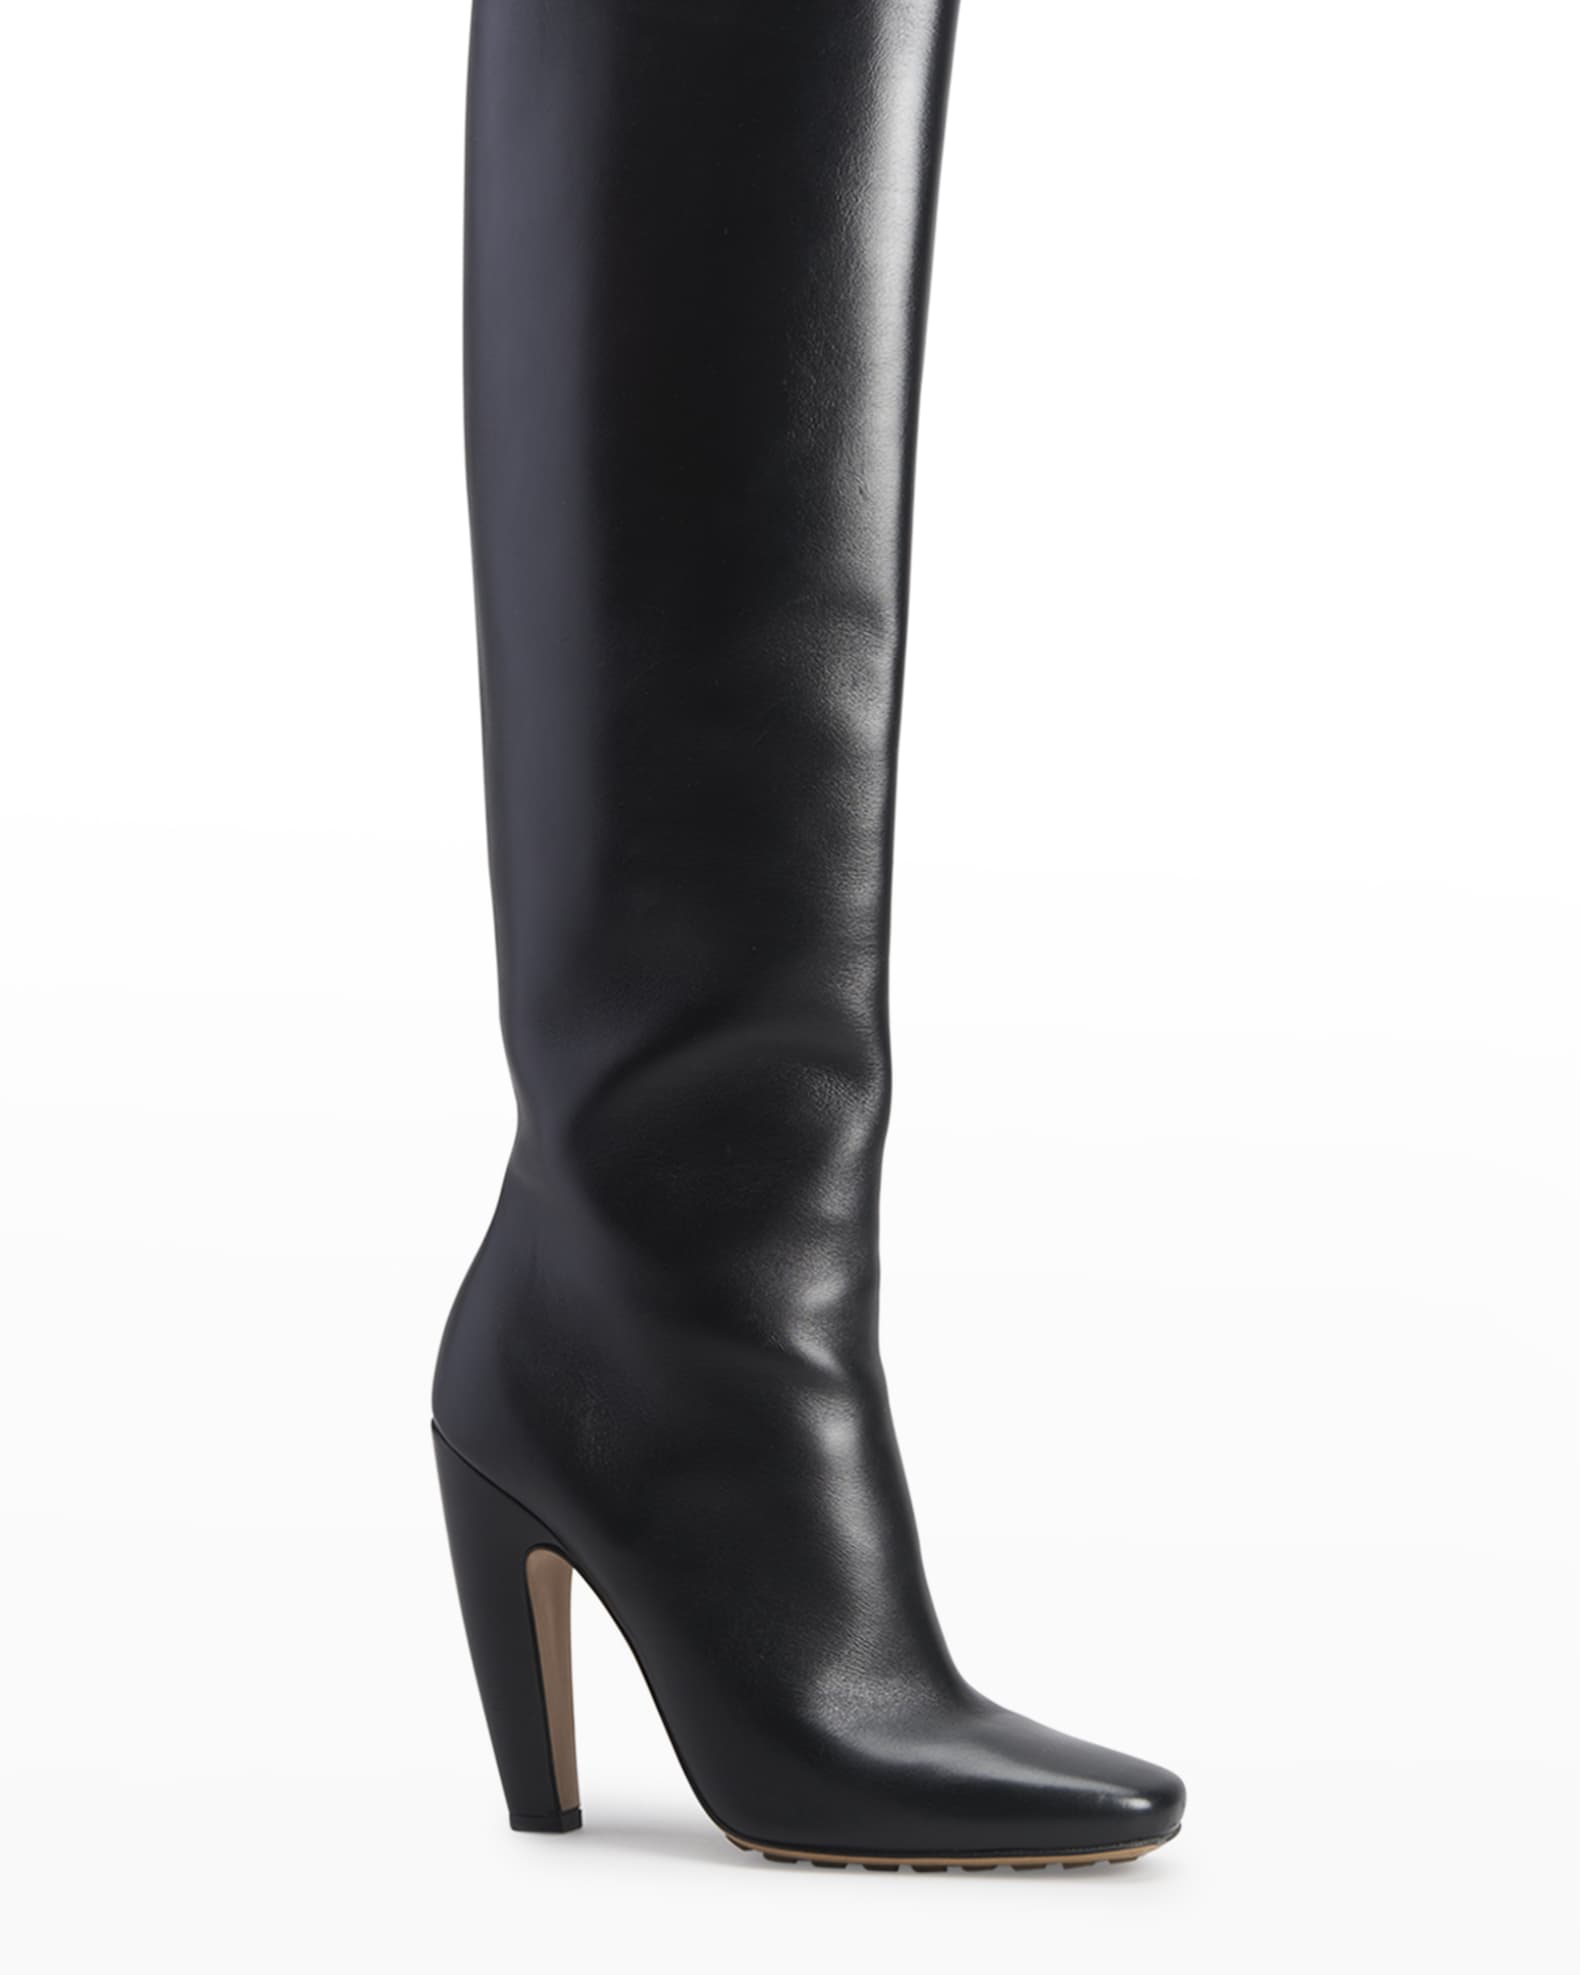 Bottega Veneta Leather Knee Boots | Neiman Marcus